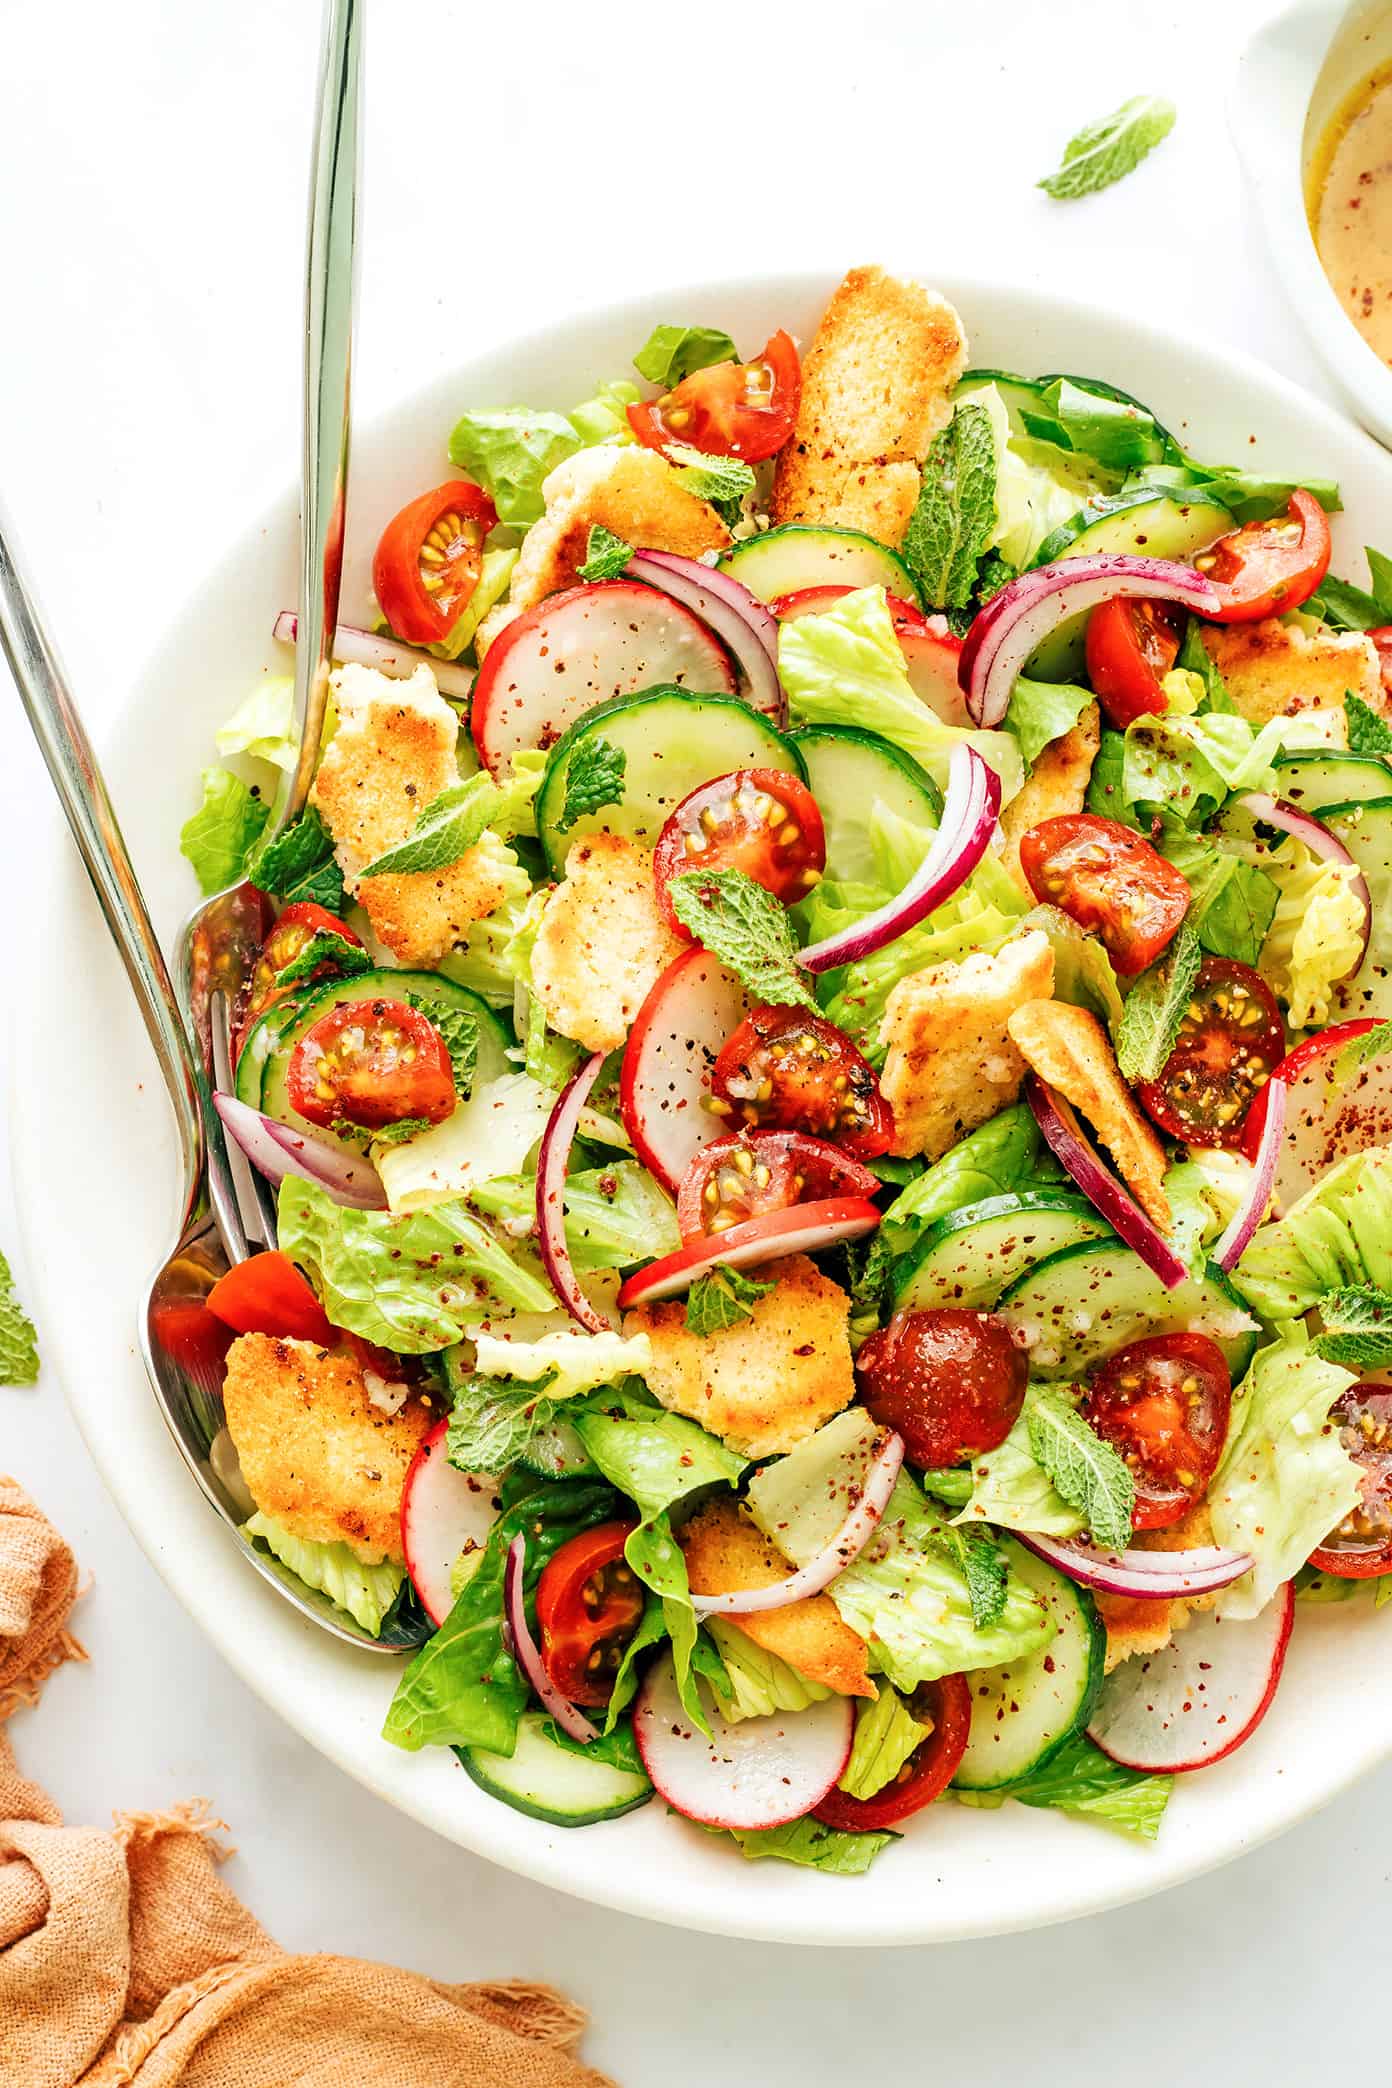 https://www.gimmesomeoven.com/wp-content/uploads/2020/04/Fattoush-Salad-Recipe-6-2.jpg